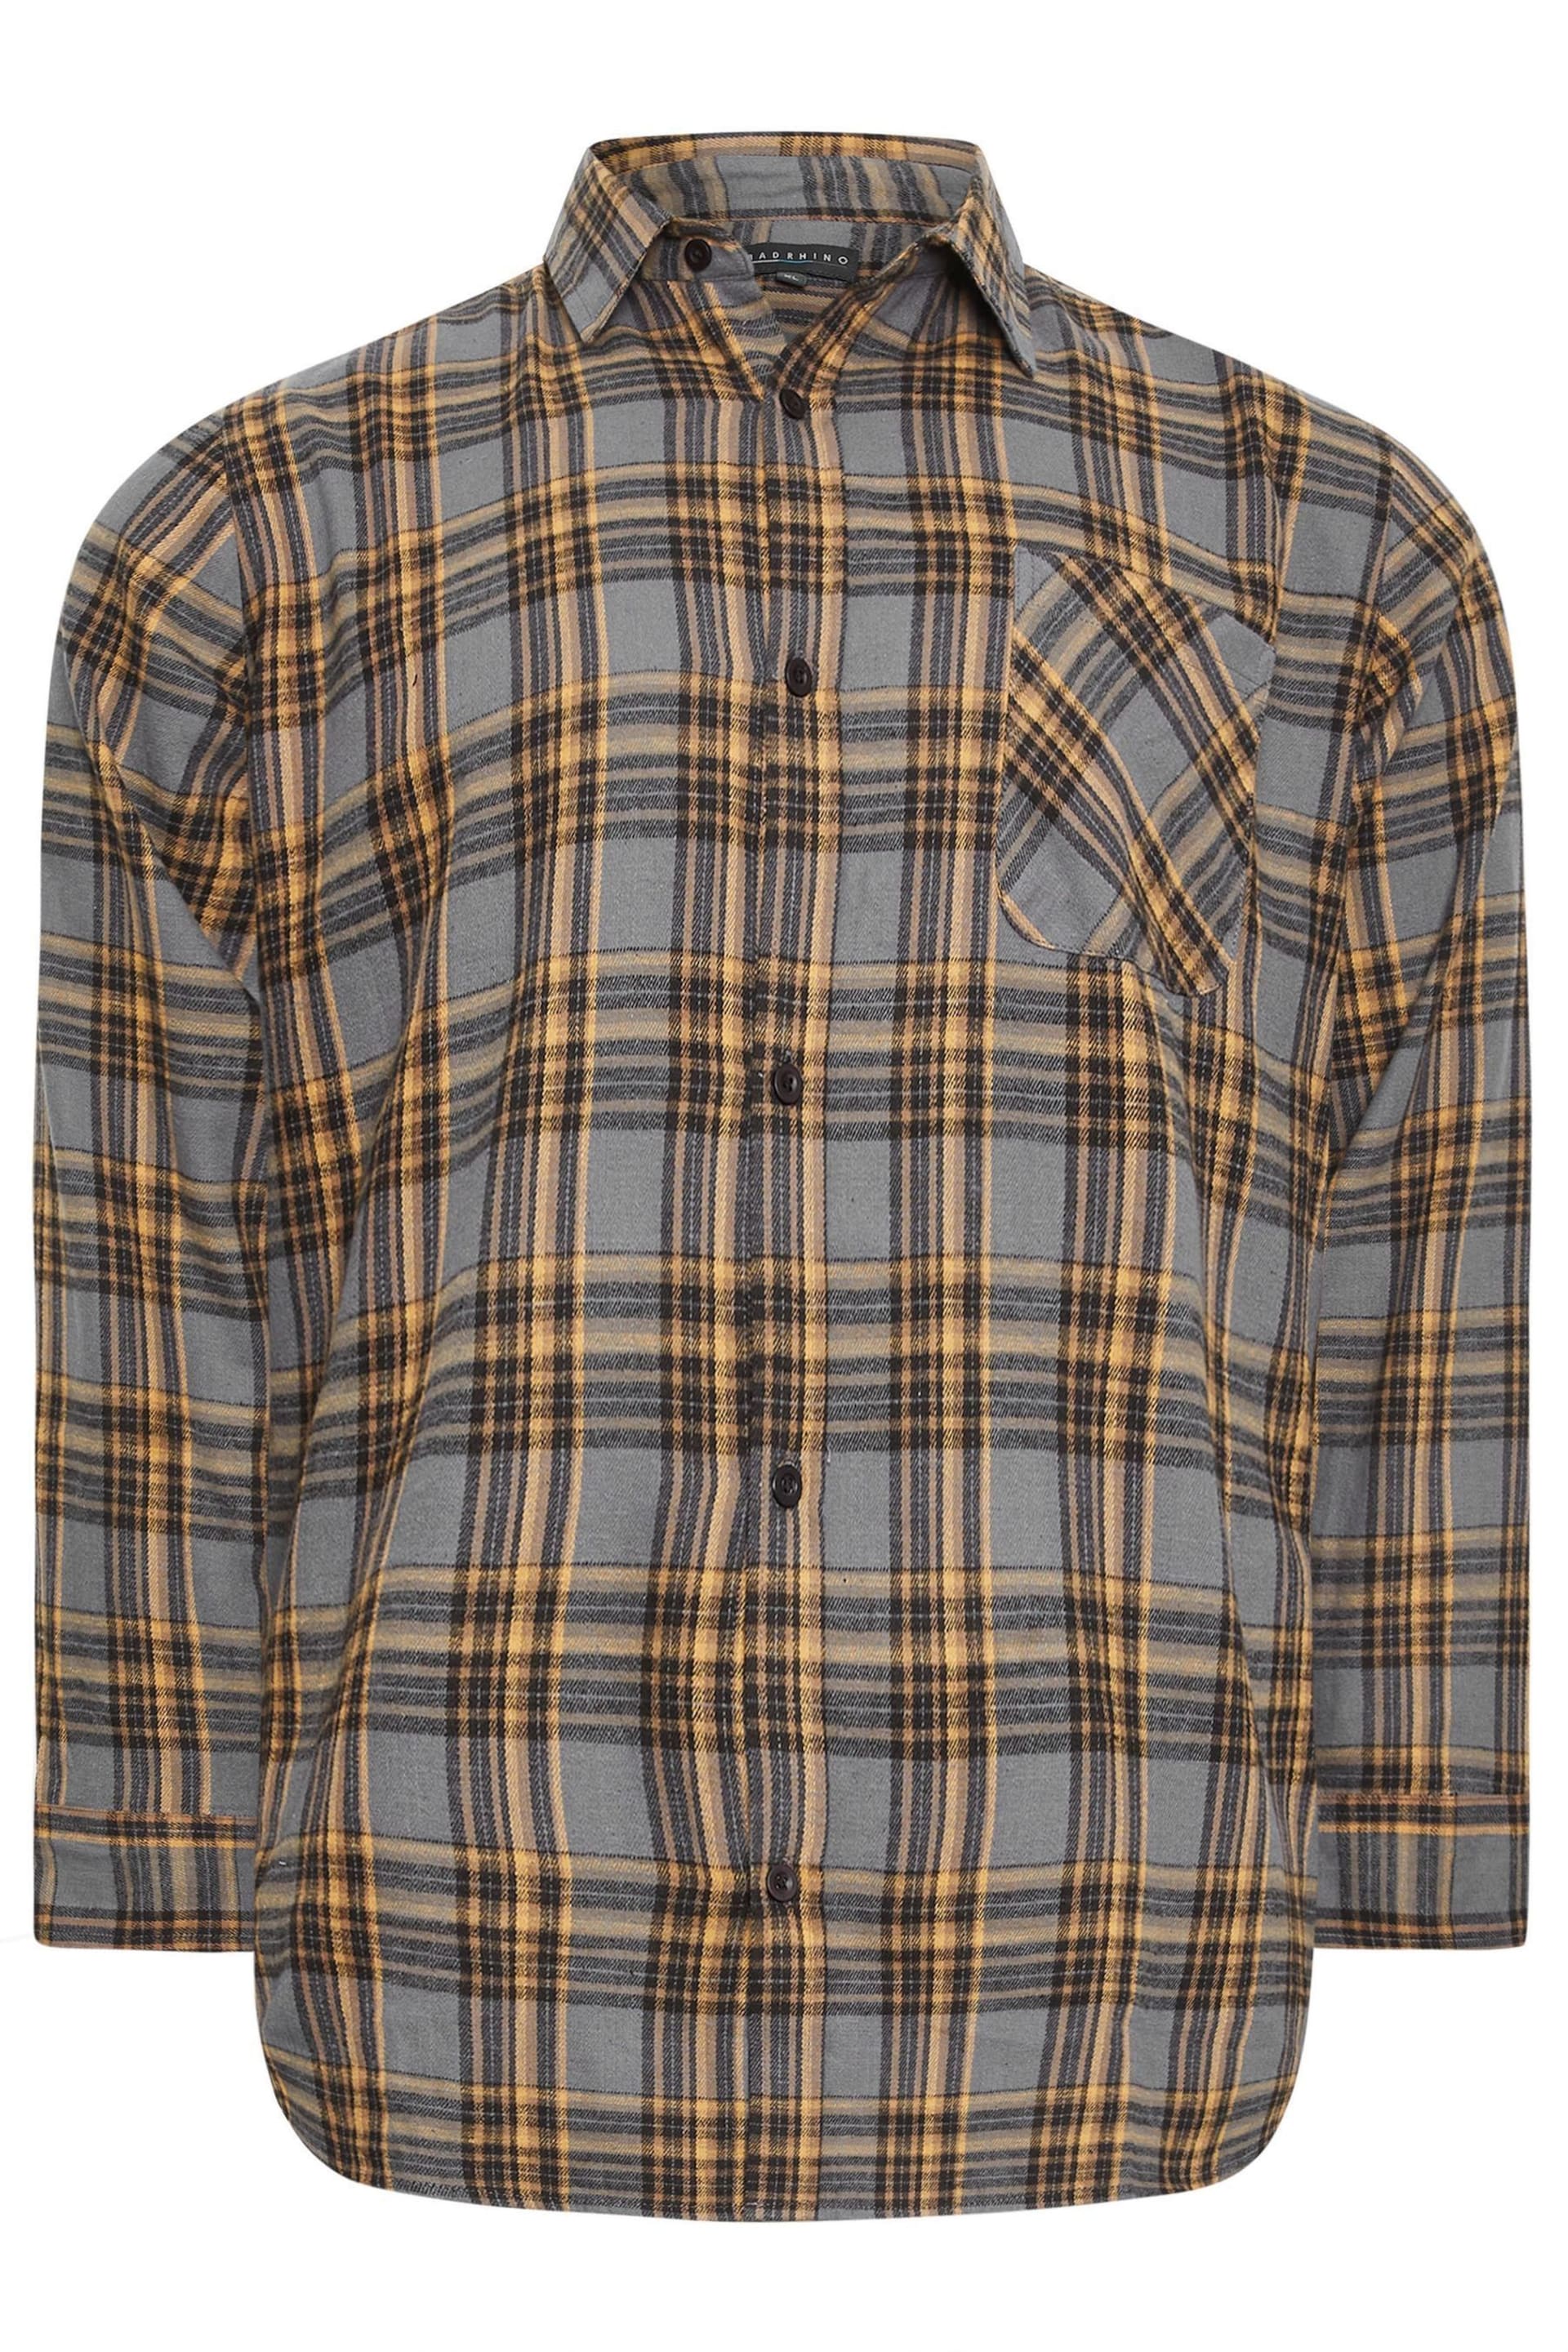 BadRhino Big & Tall Grey Brushed Check Shirt - Image 3 of 4